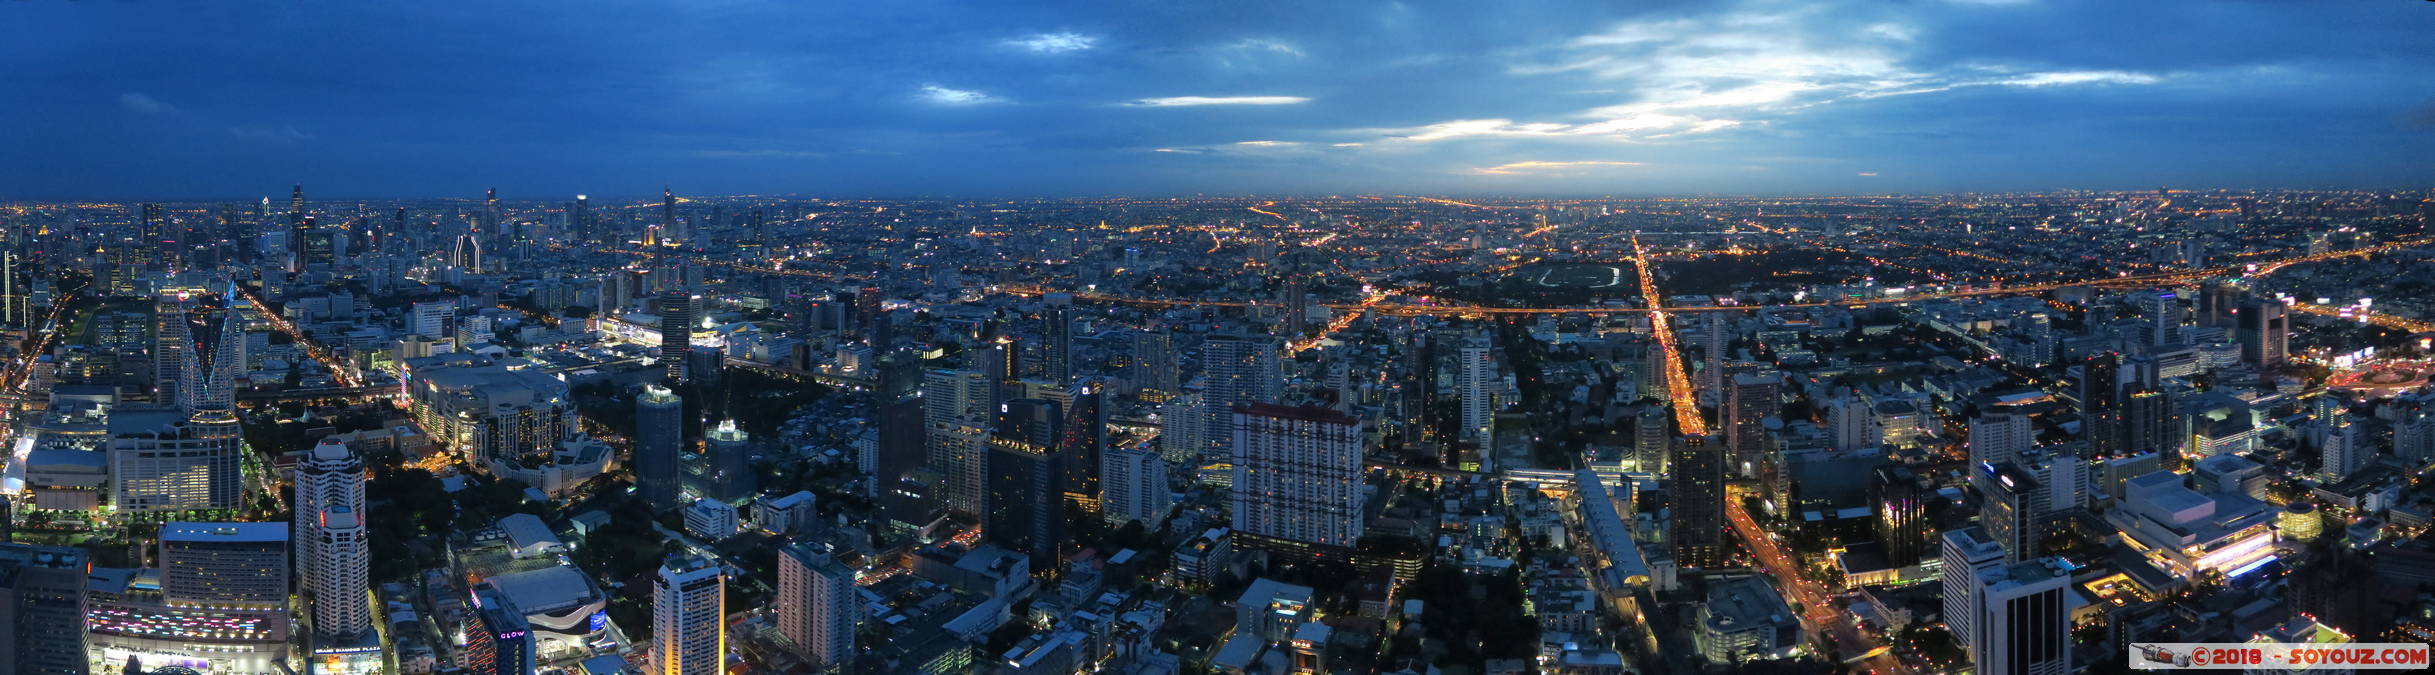 Bangkok by Night - Panoramic from Baiyoke Tower II
Mots-clés: Bangkok Ding Daeng geo:lat=13.75460569 geo:lon=100.54050475 geotagged Makkasan THA Thaïlande Nuit Baiyoke Tower II skyscraper panorama